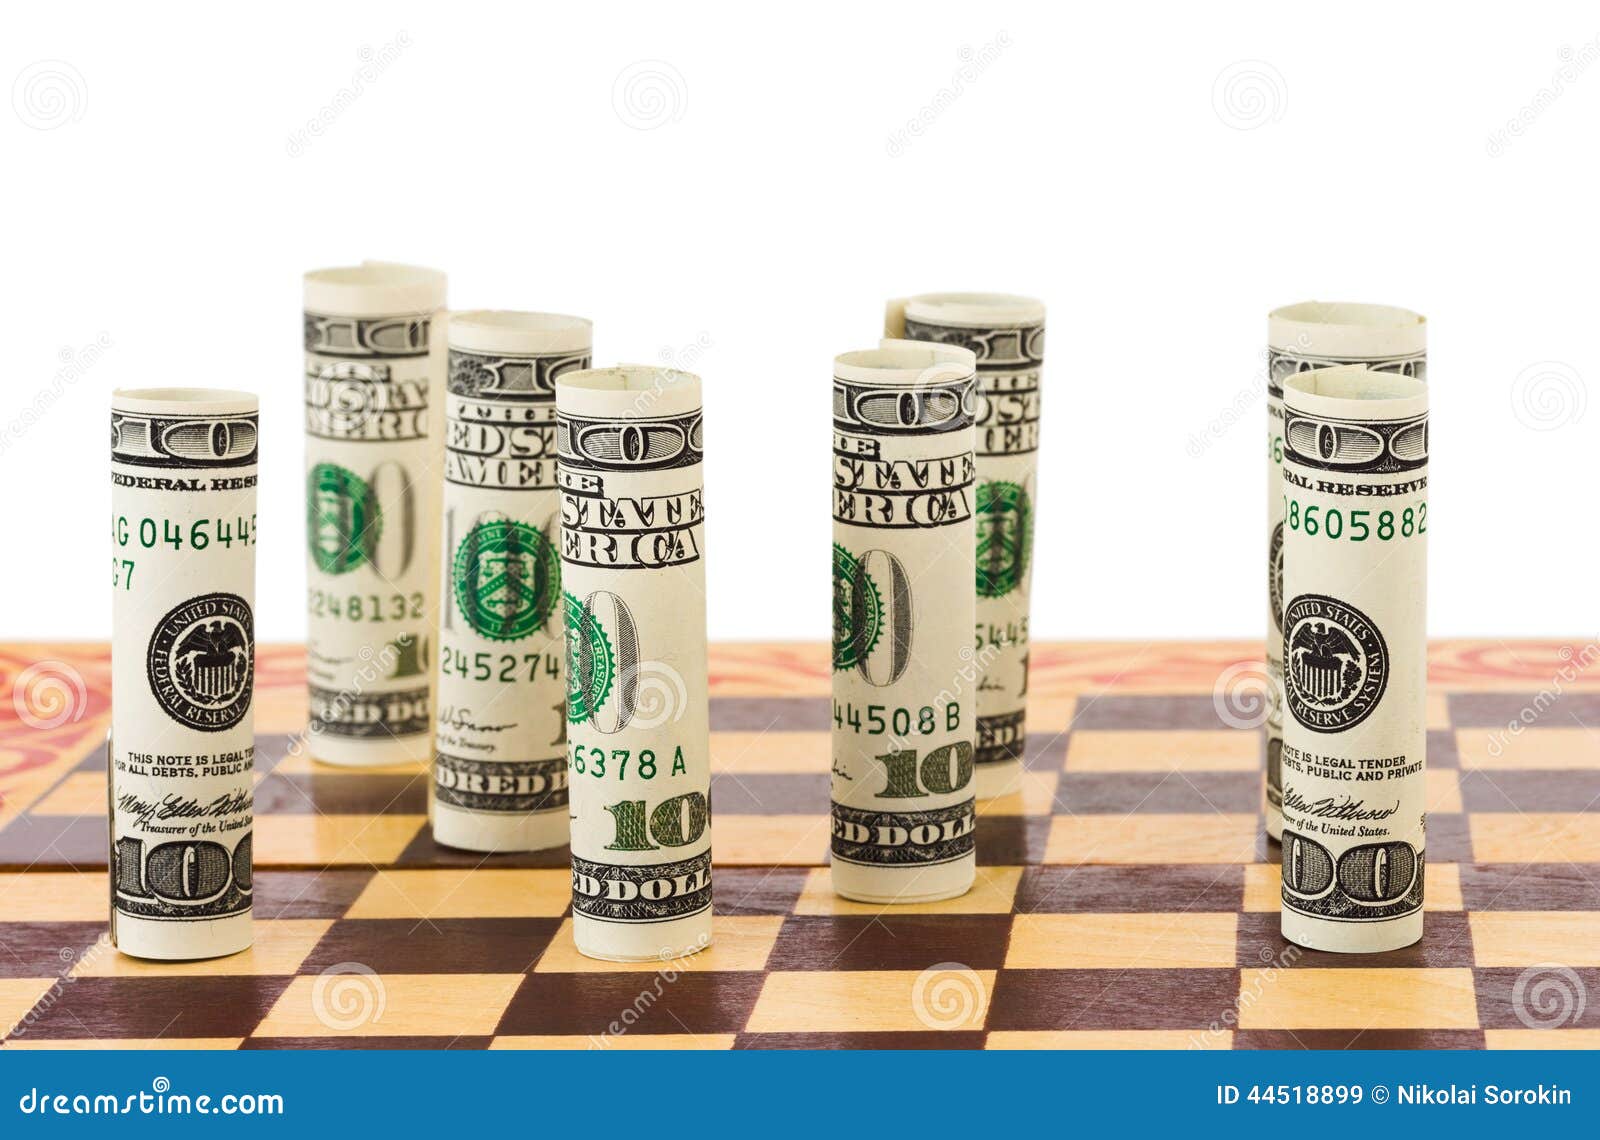 play chess and make money